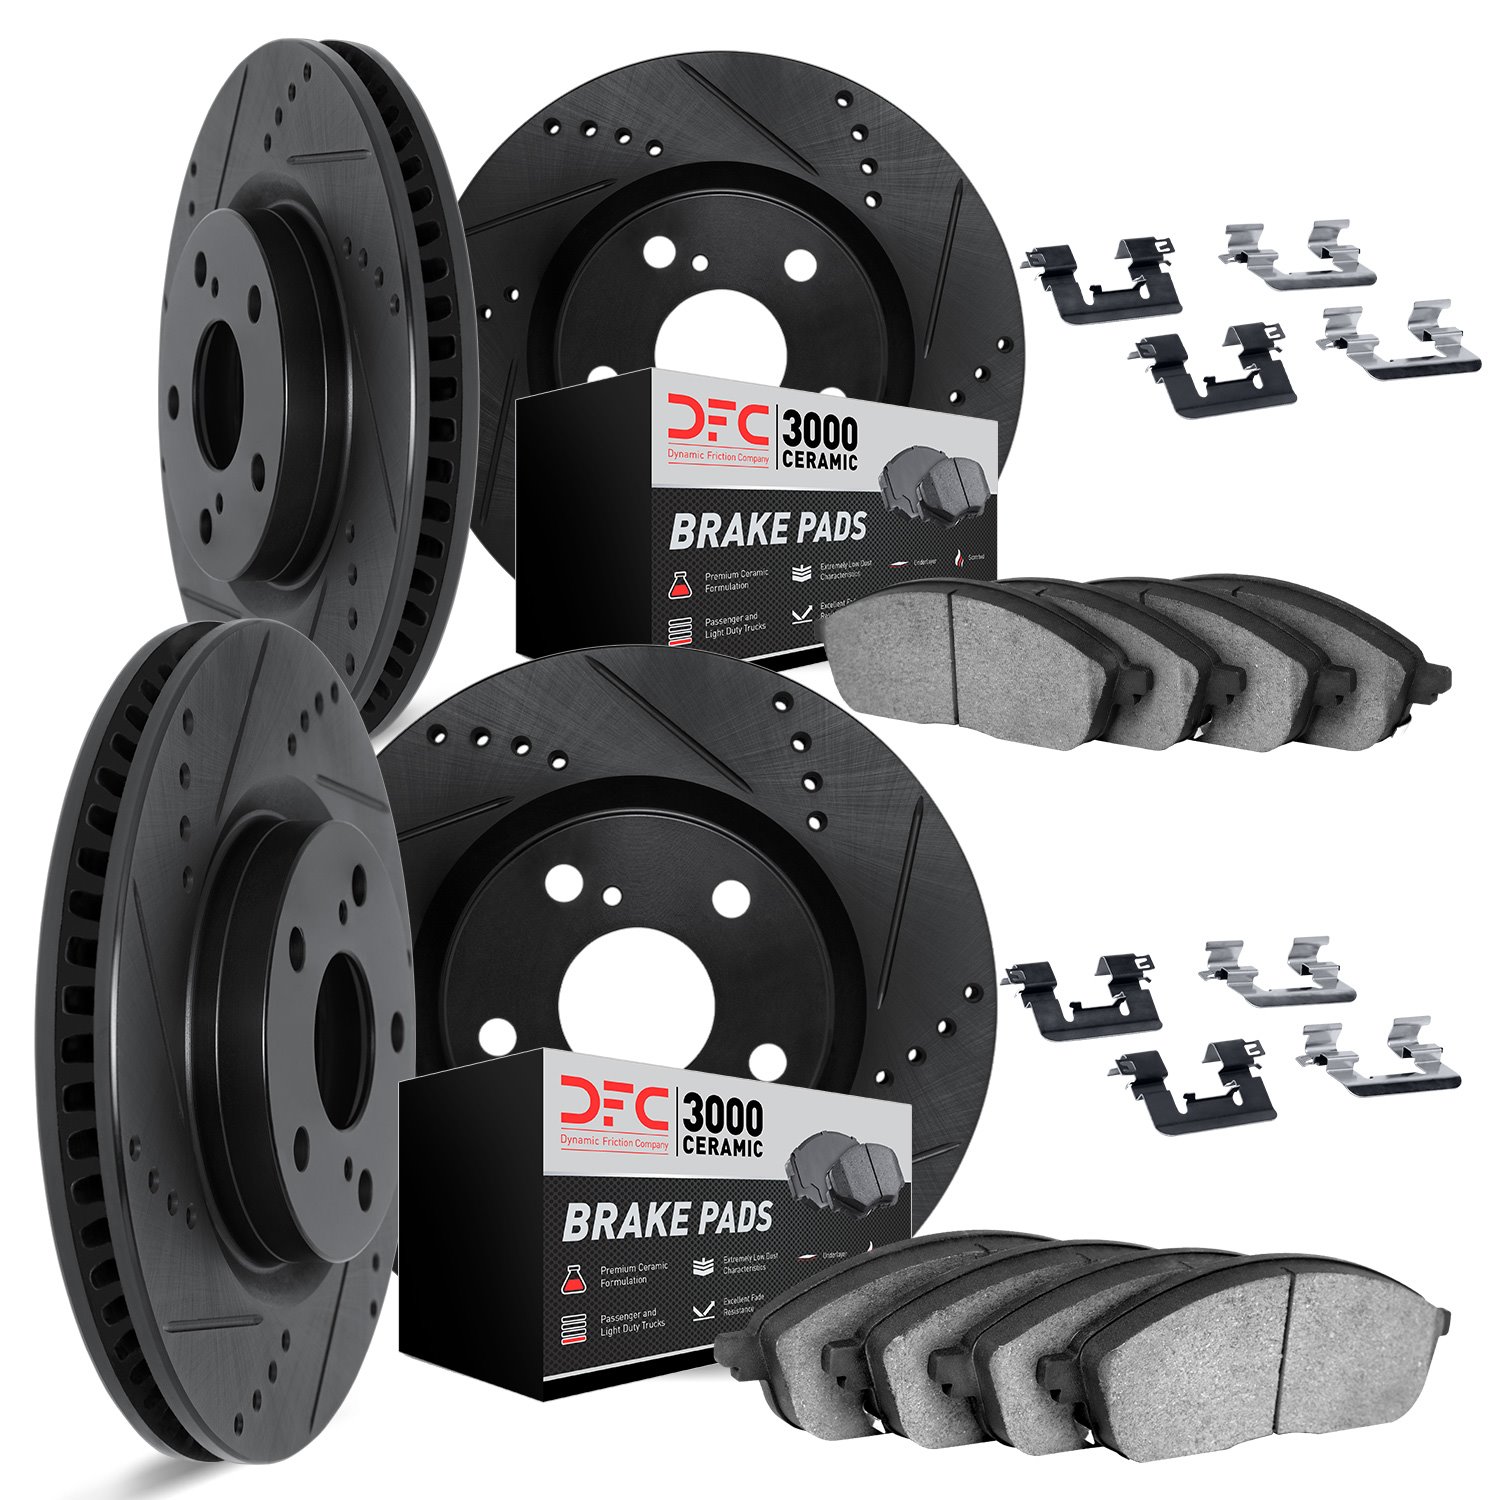 8314-75026 Drilled/Slotted Brake Rotors with 3000-Series Ceramic Brake Pads Kit & Hardware [Black], Fits Select Lexus/Toyota/Sci